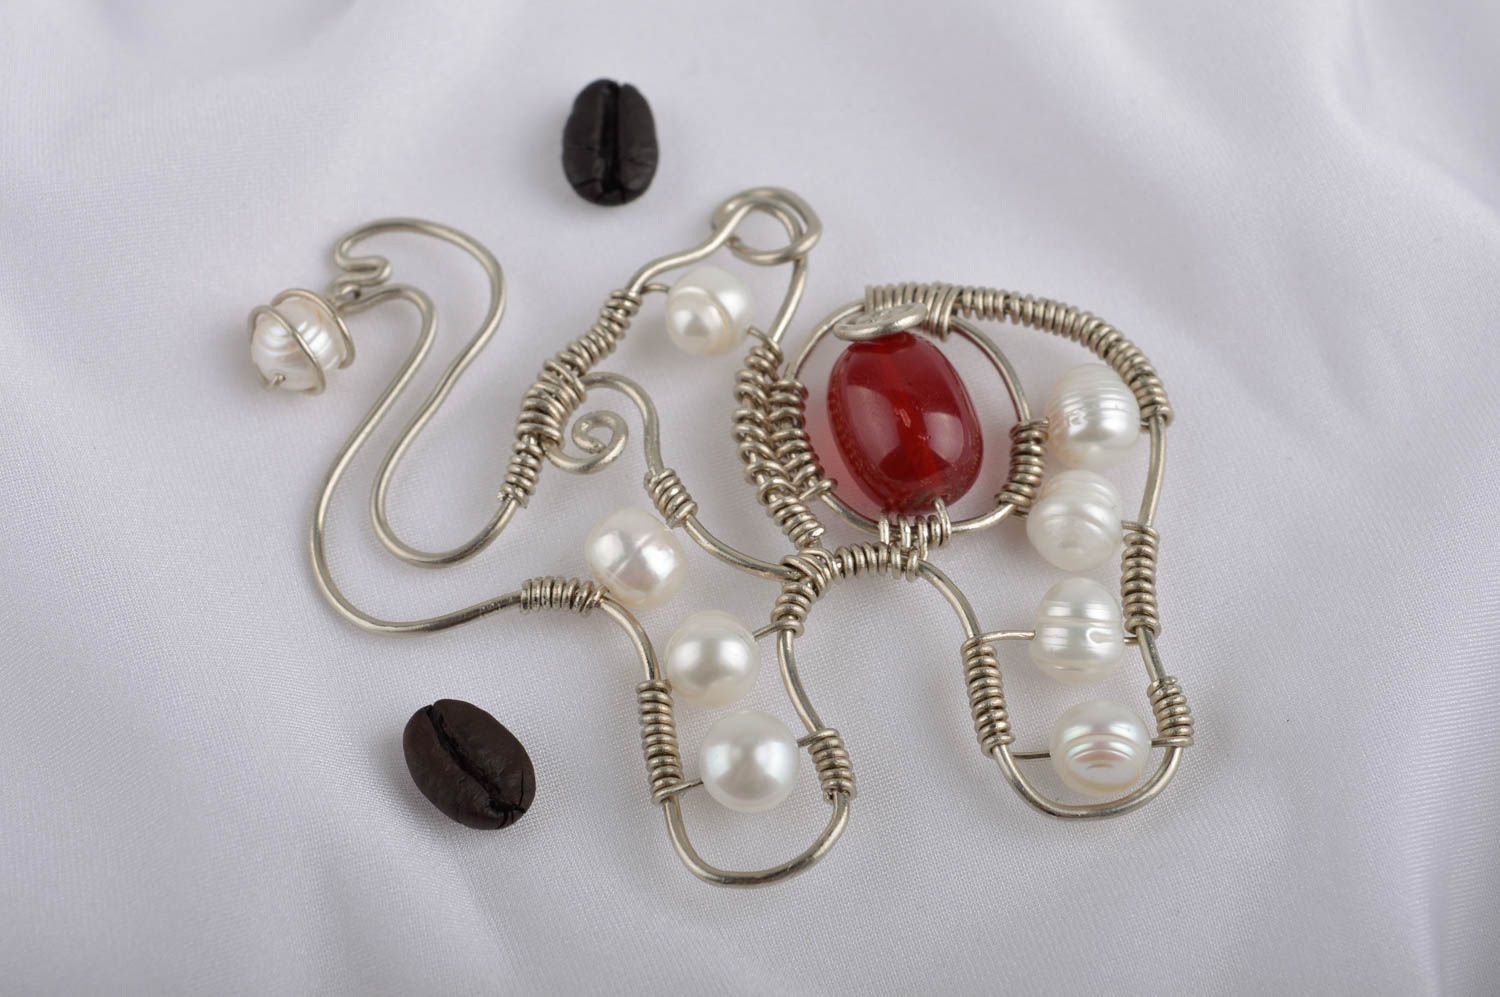 Handmade metal jewelry pendant necklace charm necklace designer accessories photo 1